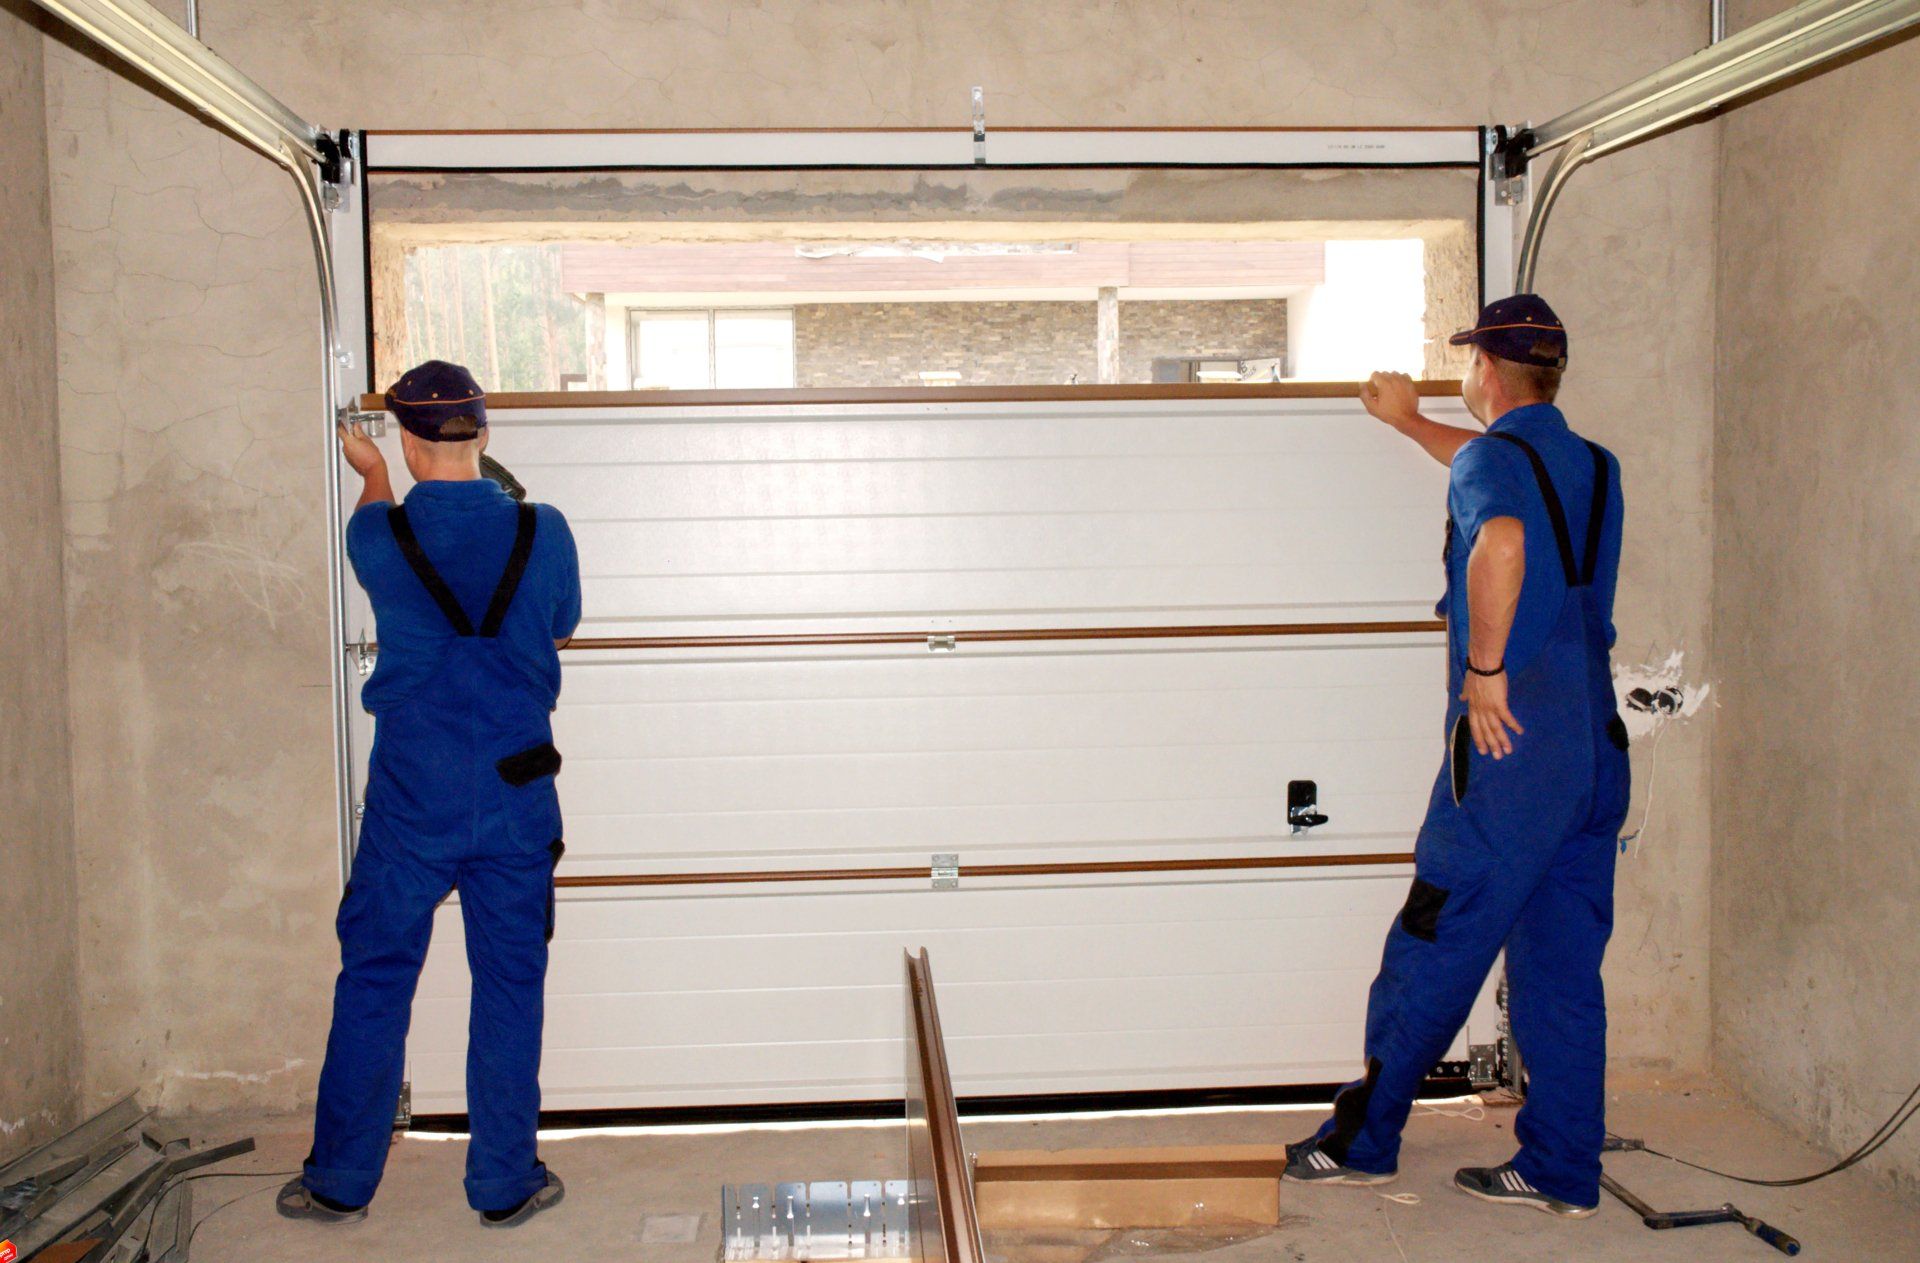 two men are installing a garage door in a garage .